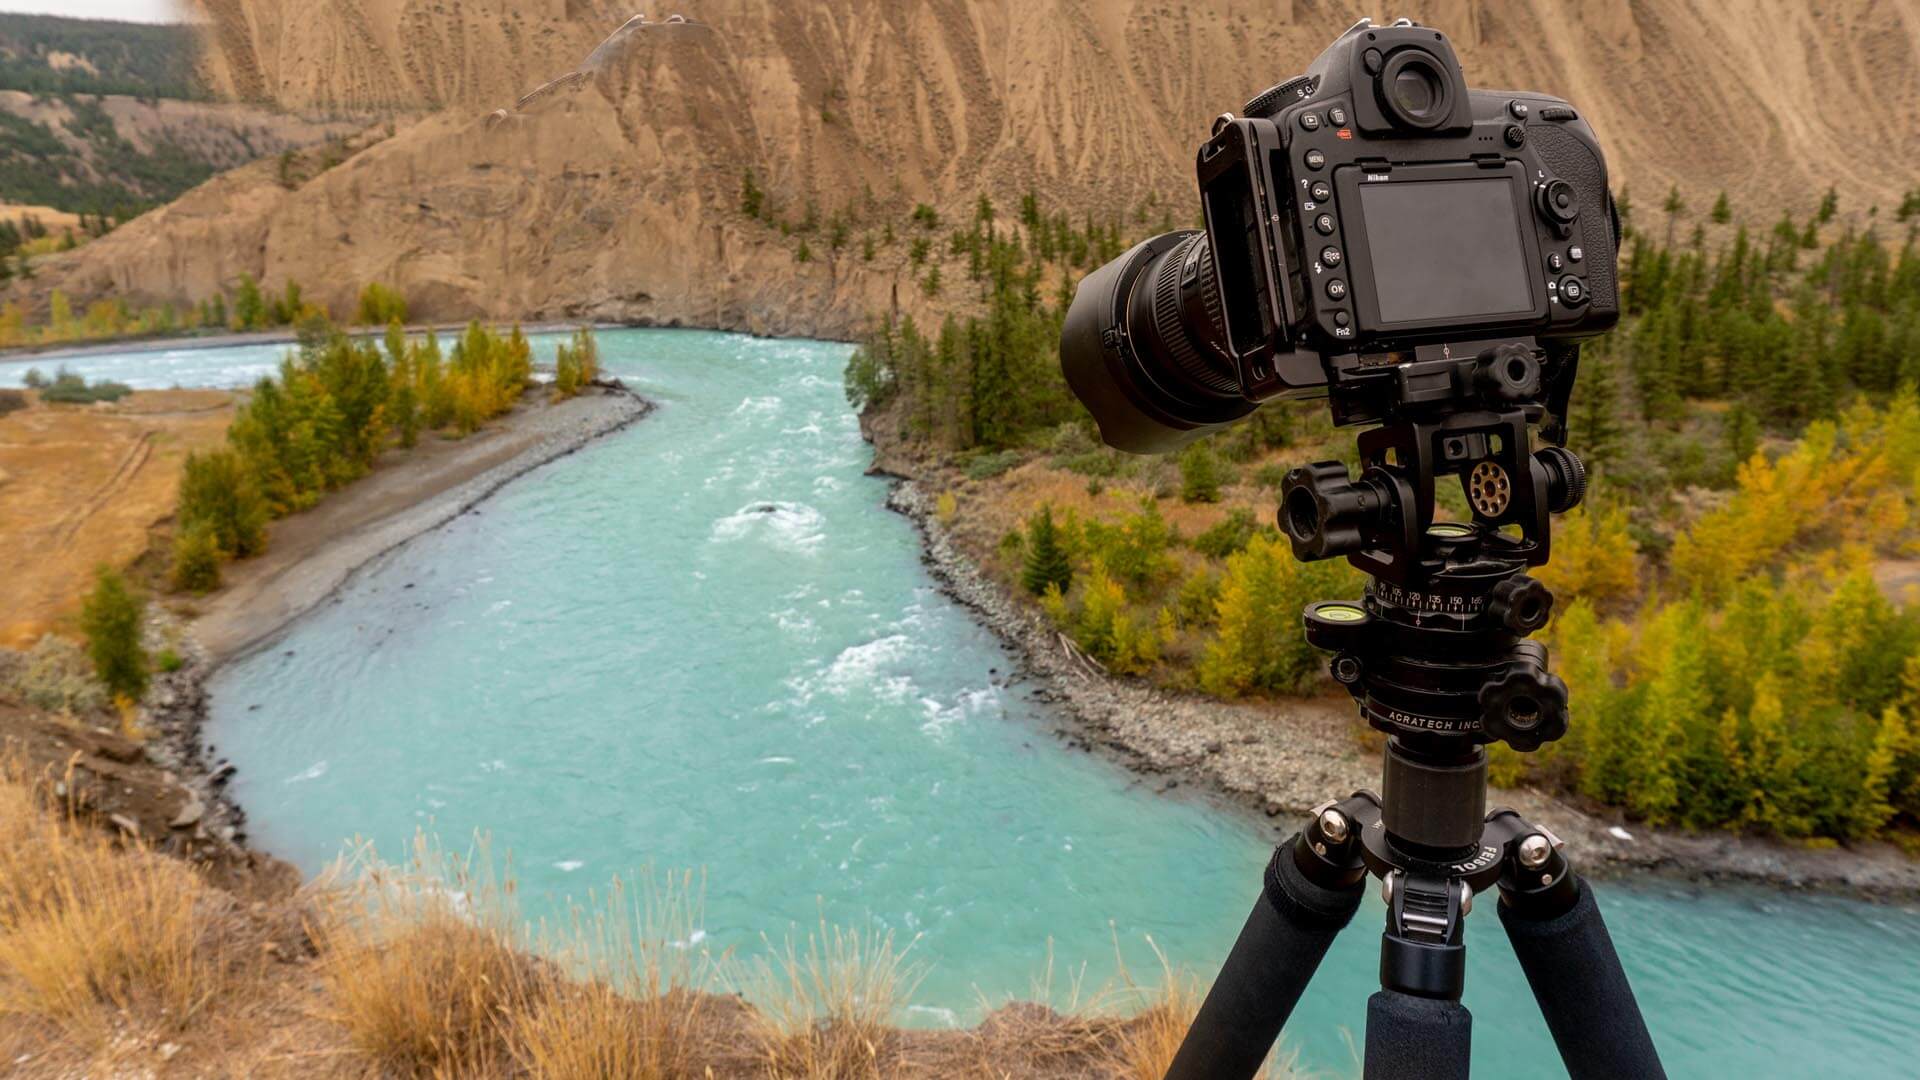 The Nikon D850 photographing a rocky mountain stream